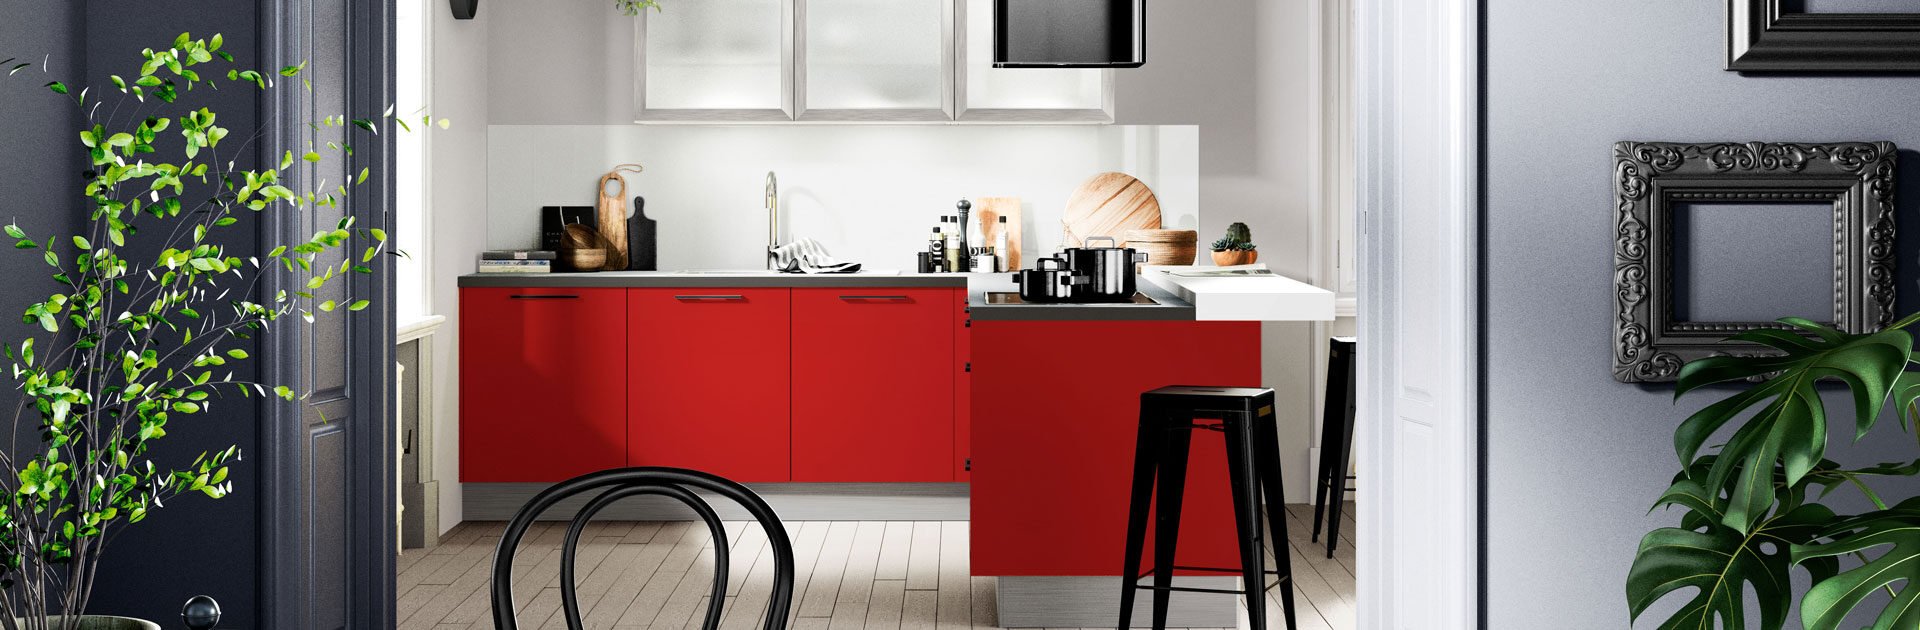 Rode keuken | Gekleurde keukens | Eigenhuis Keukens